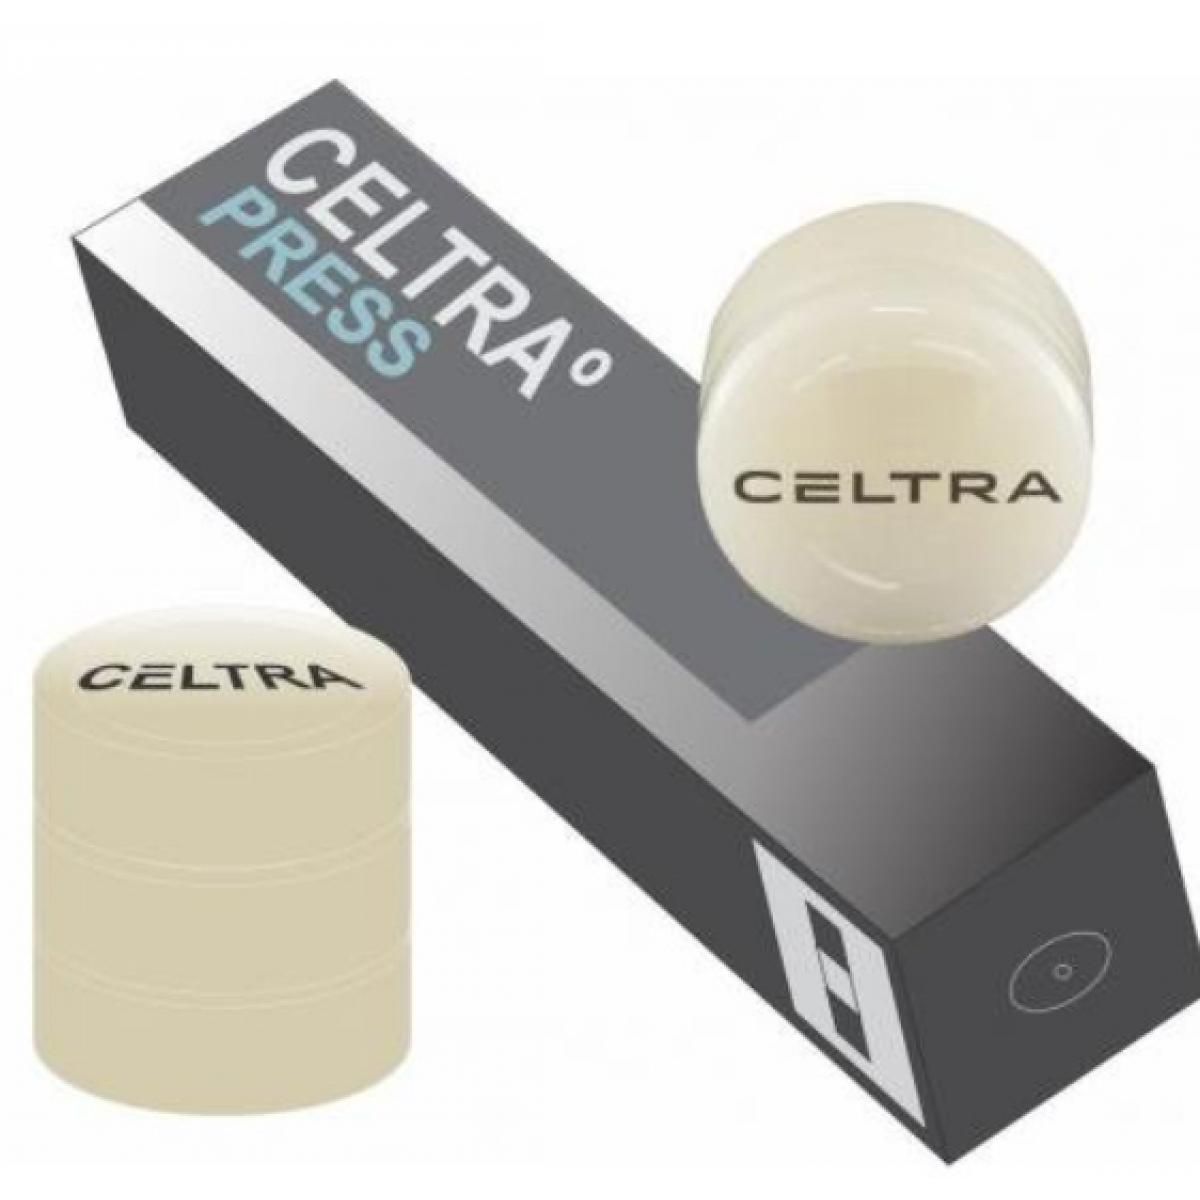 CELTRA PRESS LT B1 5 X 3 GR DENTSPLY -